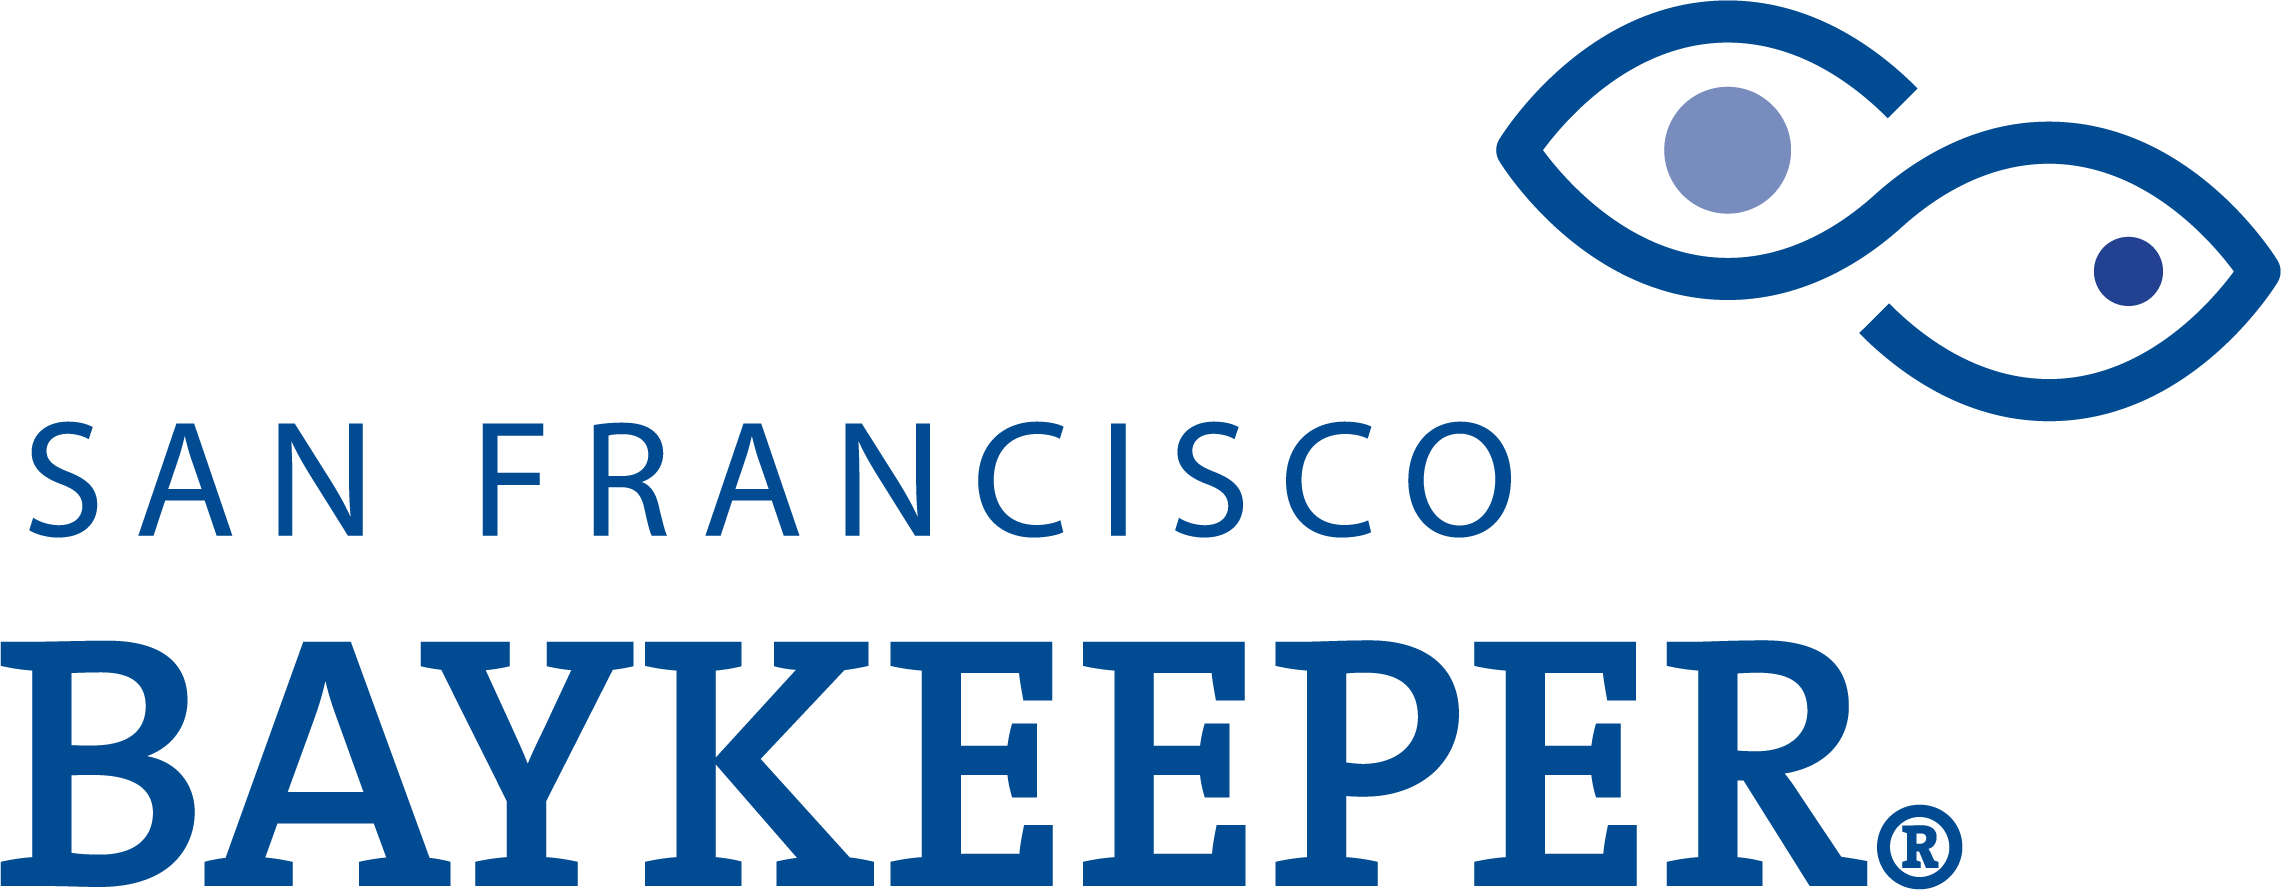 San Francisco Baykeeper logo